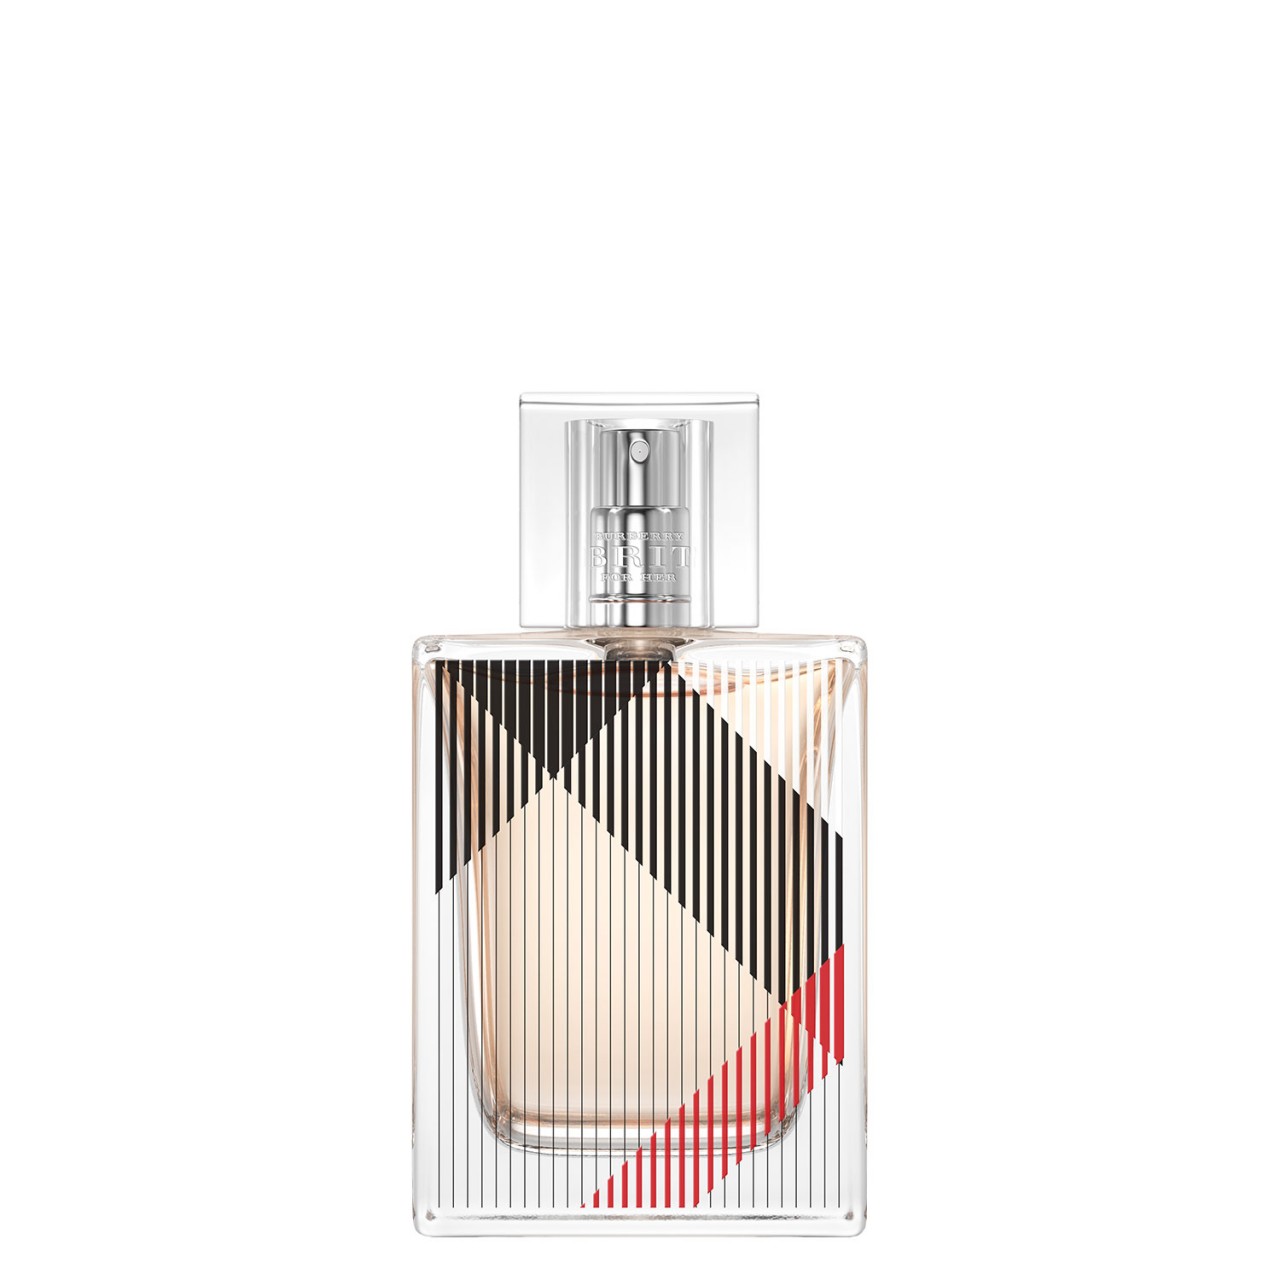 Burberry Brit - Eau de Parfum for Her von Burberry